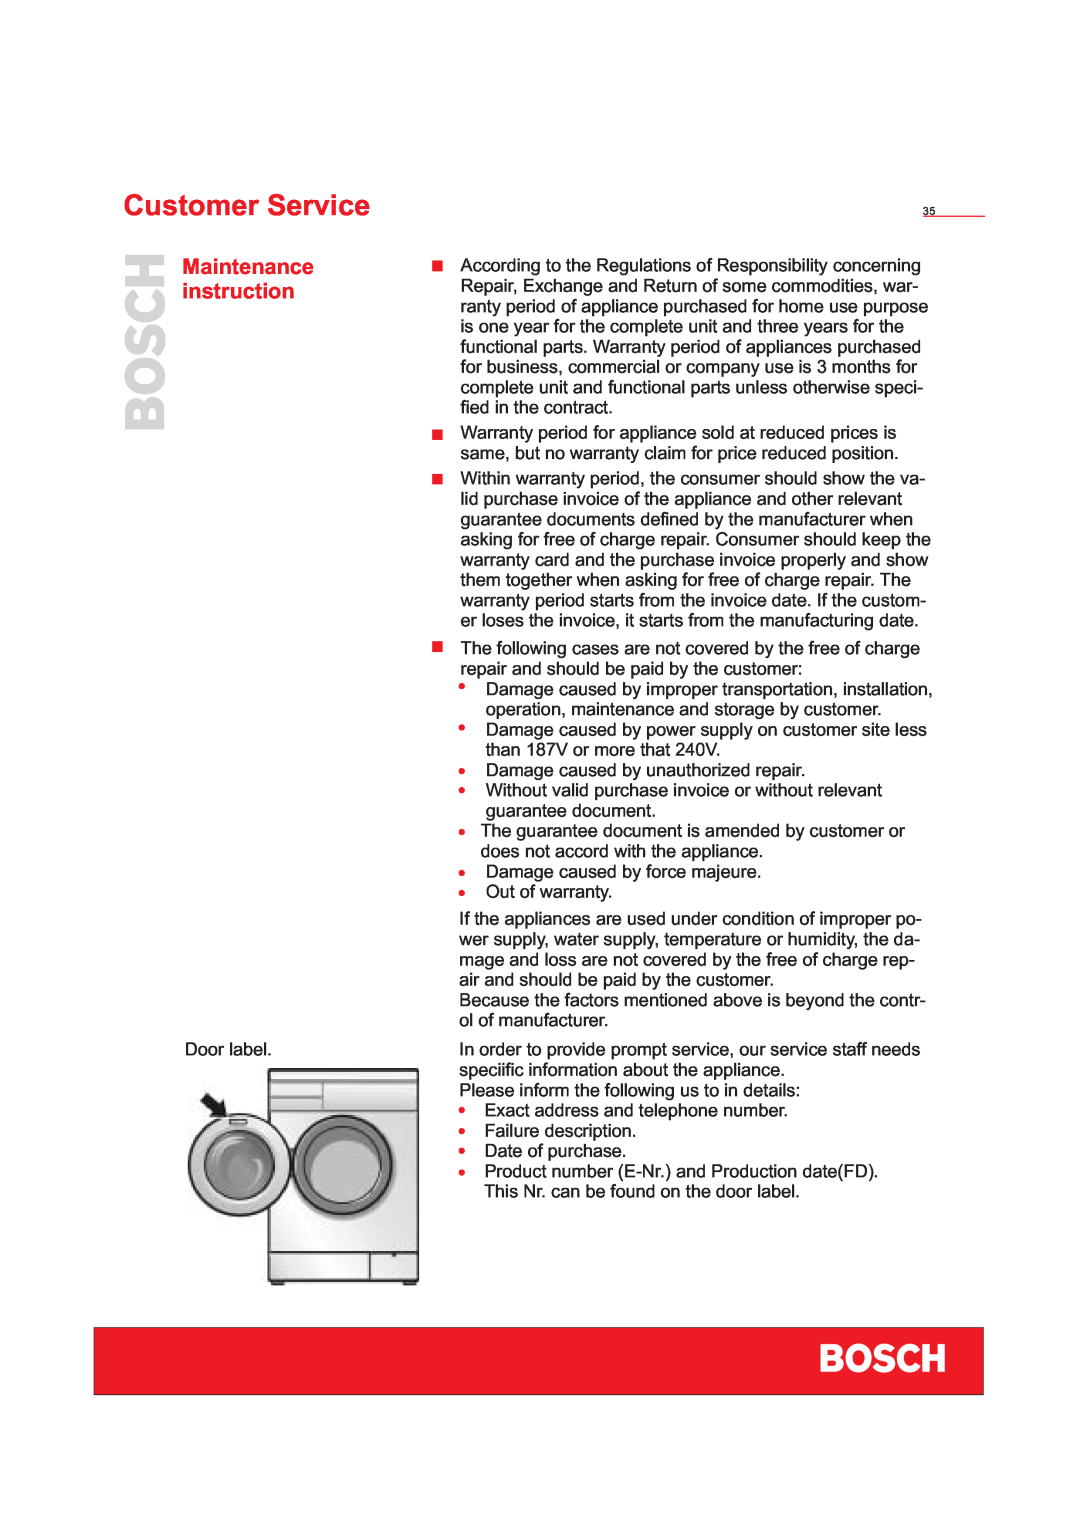 Bosch Appliances WFD50818 installation instructions Customer Service, Maintenance instruction 